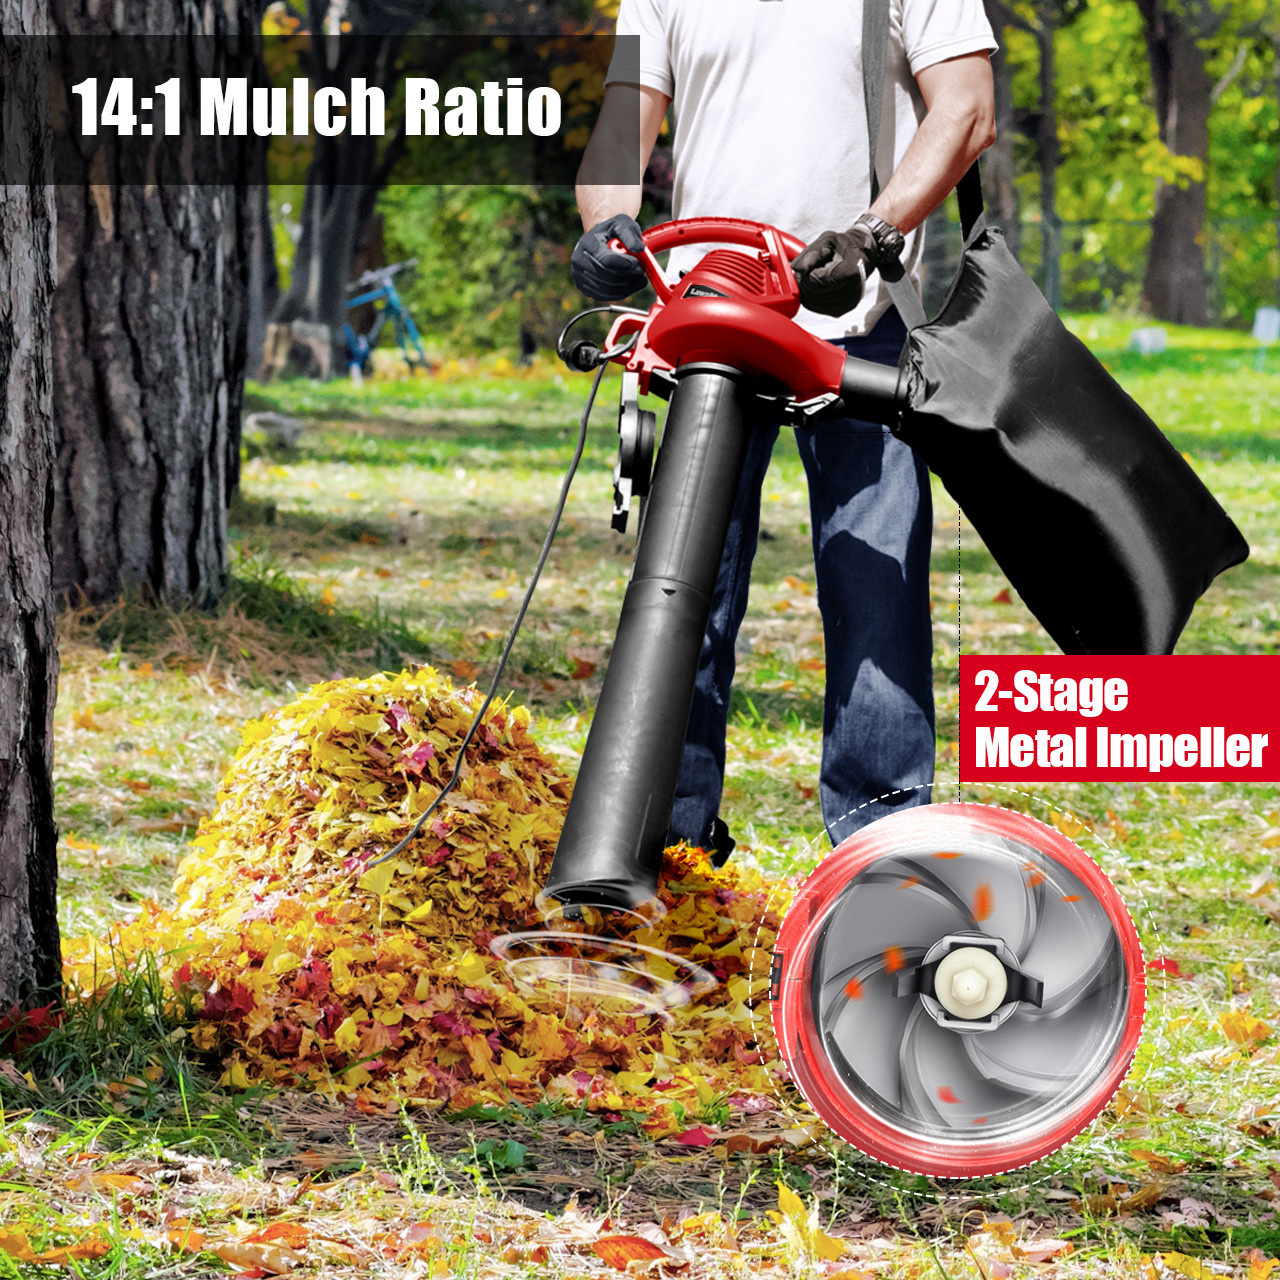 Black & Decker Backpack Leaf Blower Vacuum & Mulcher, 1 ct